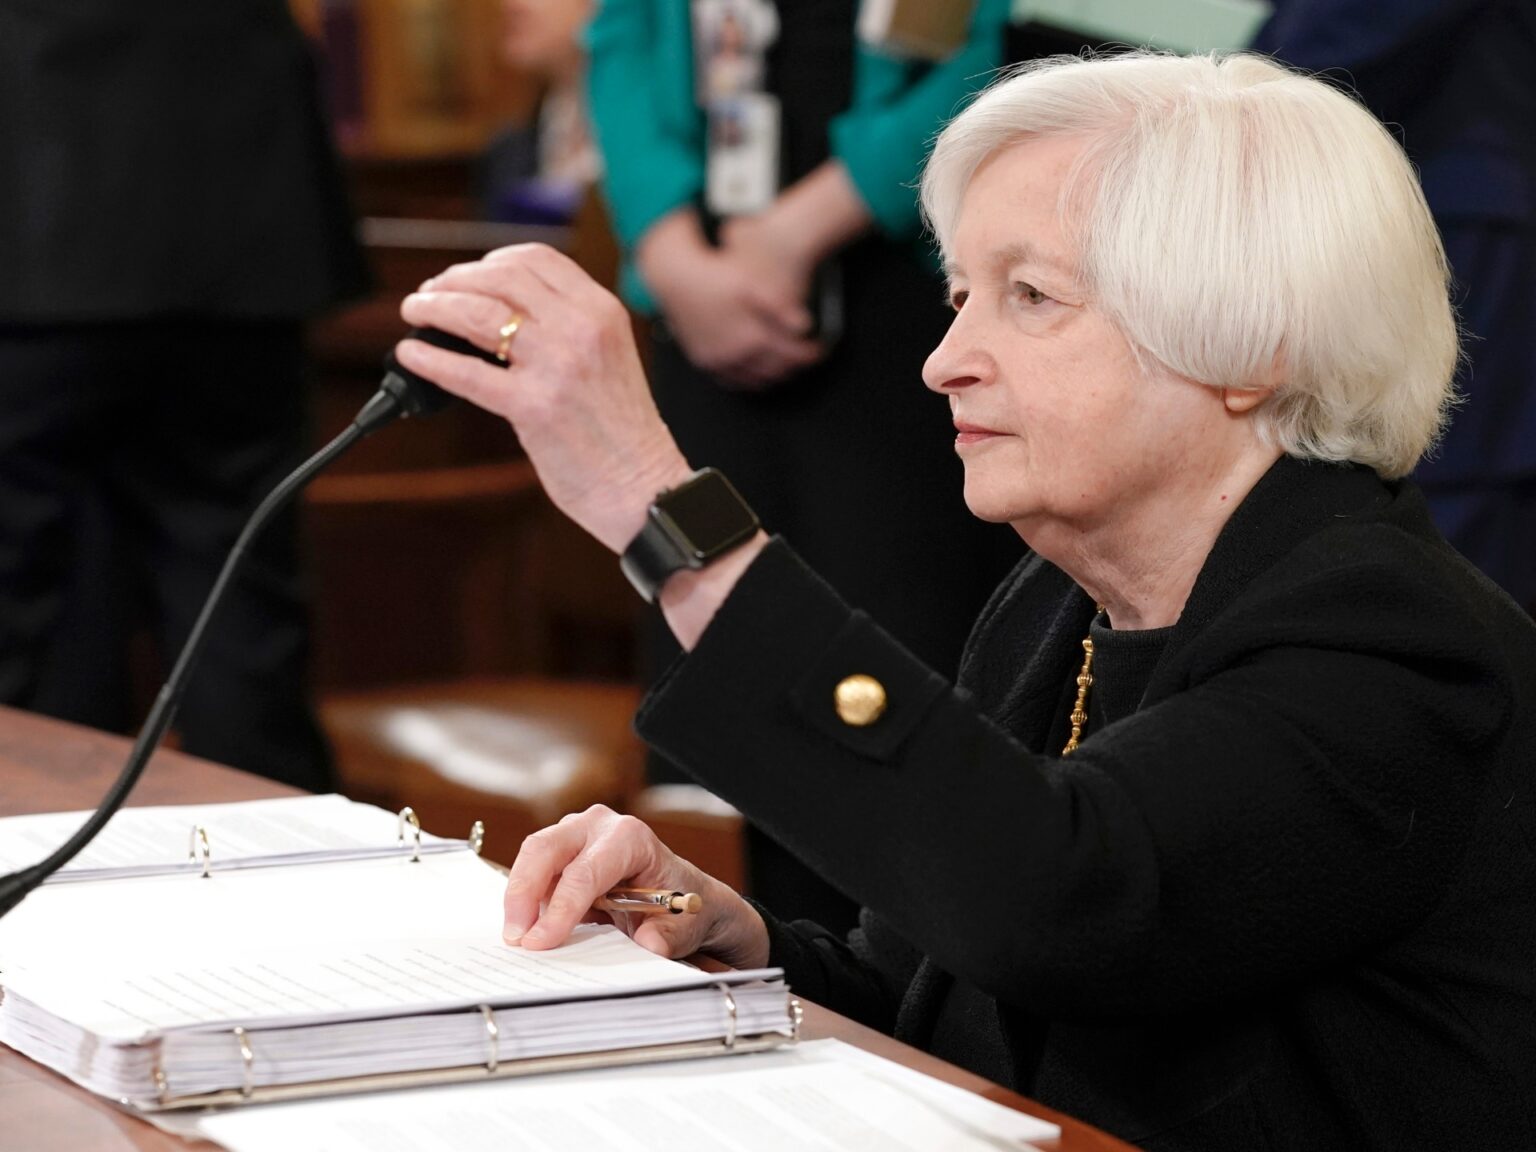 Yellen says the US is looking for “constructive” economics